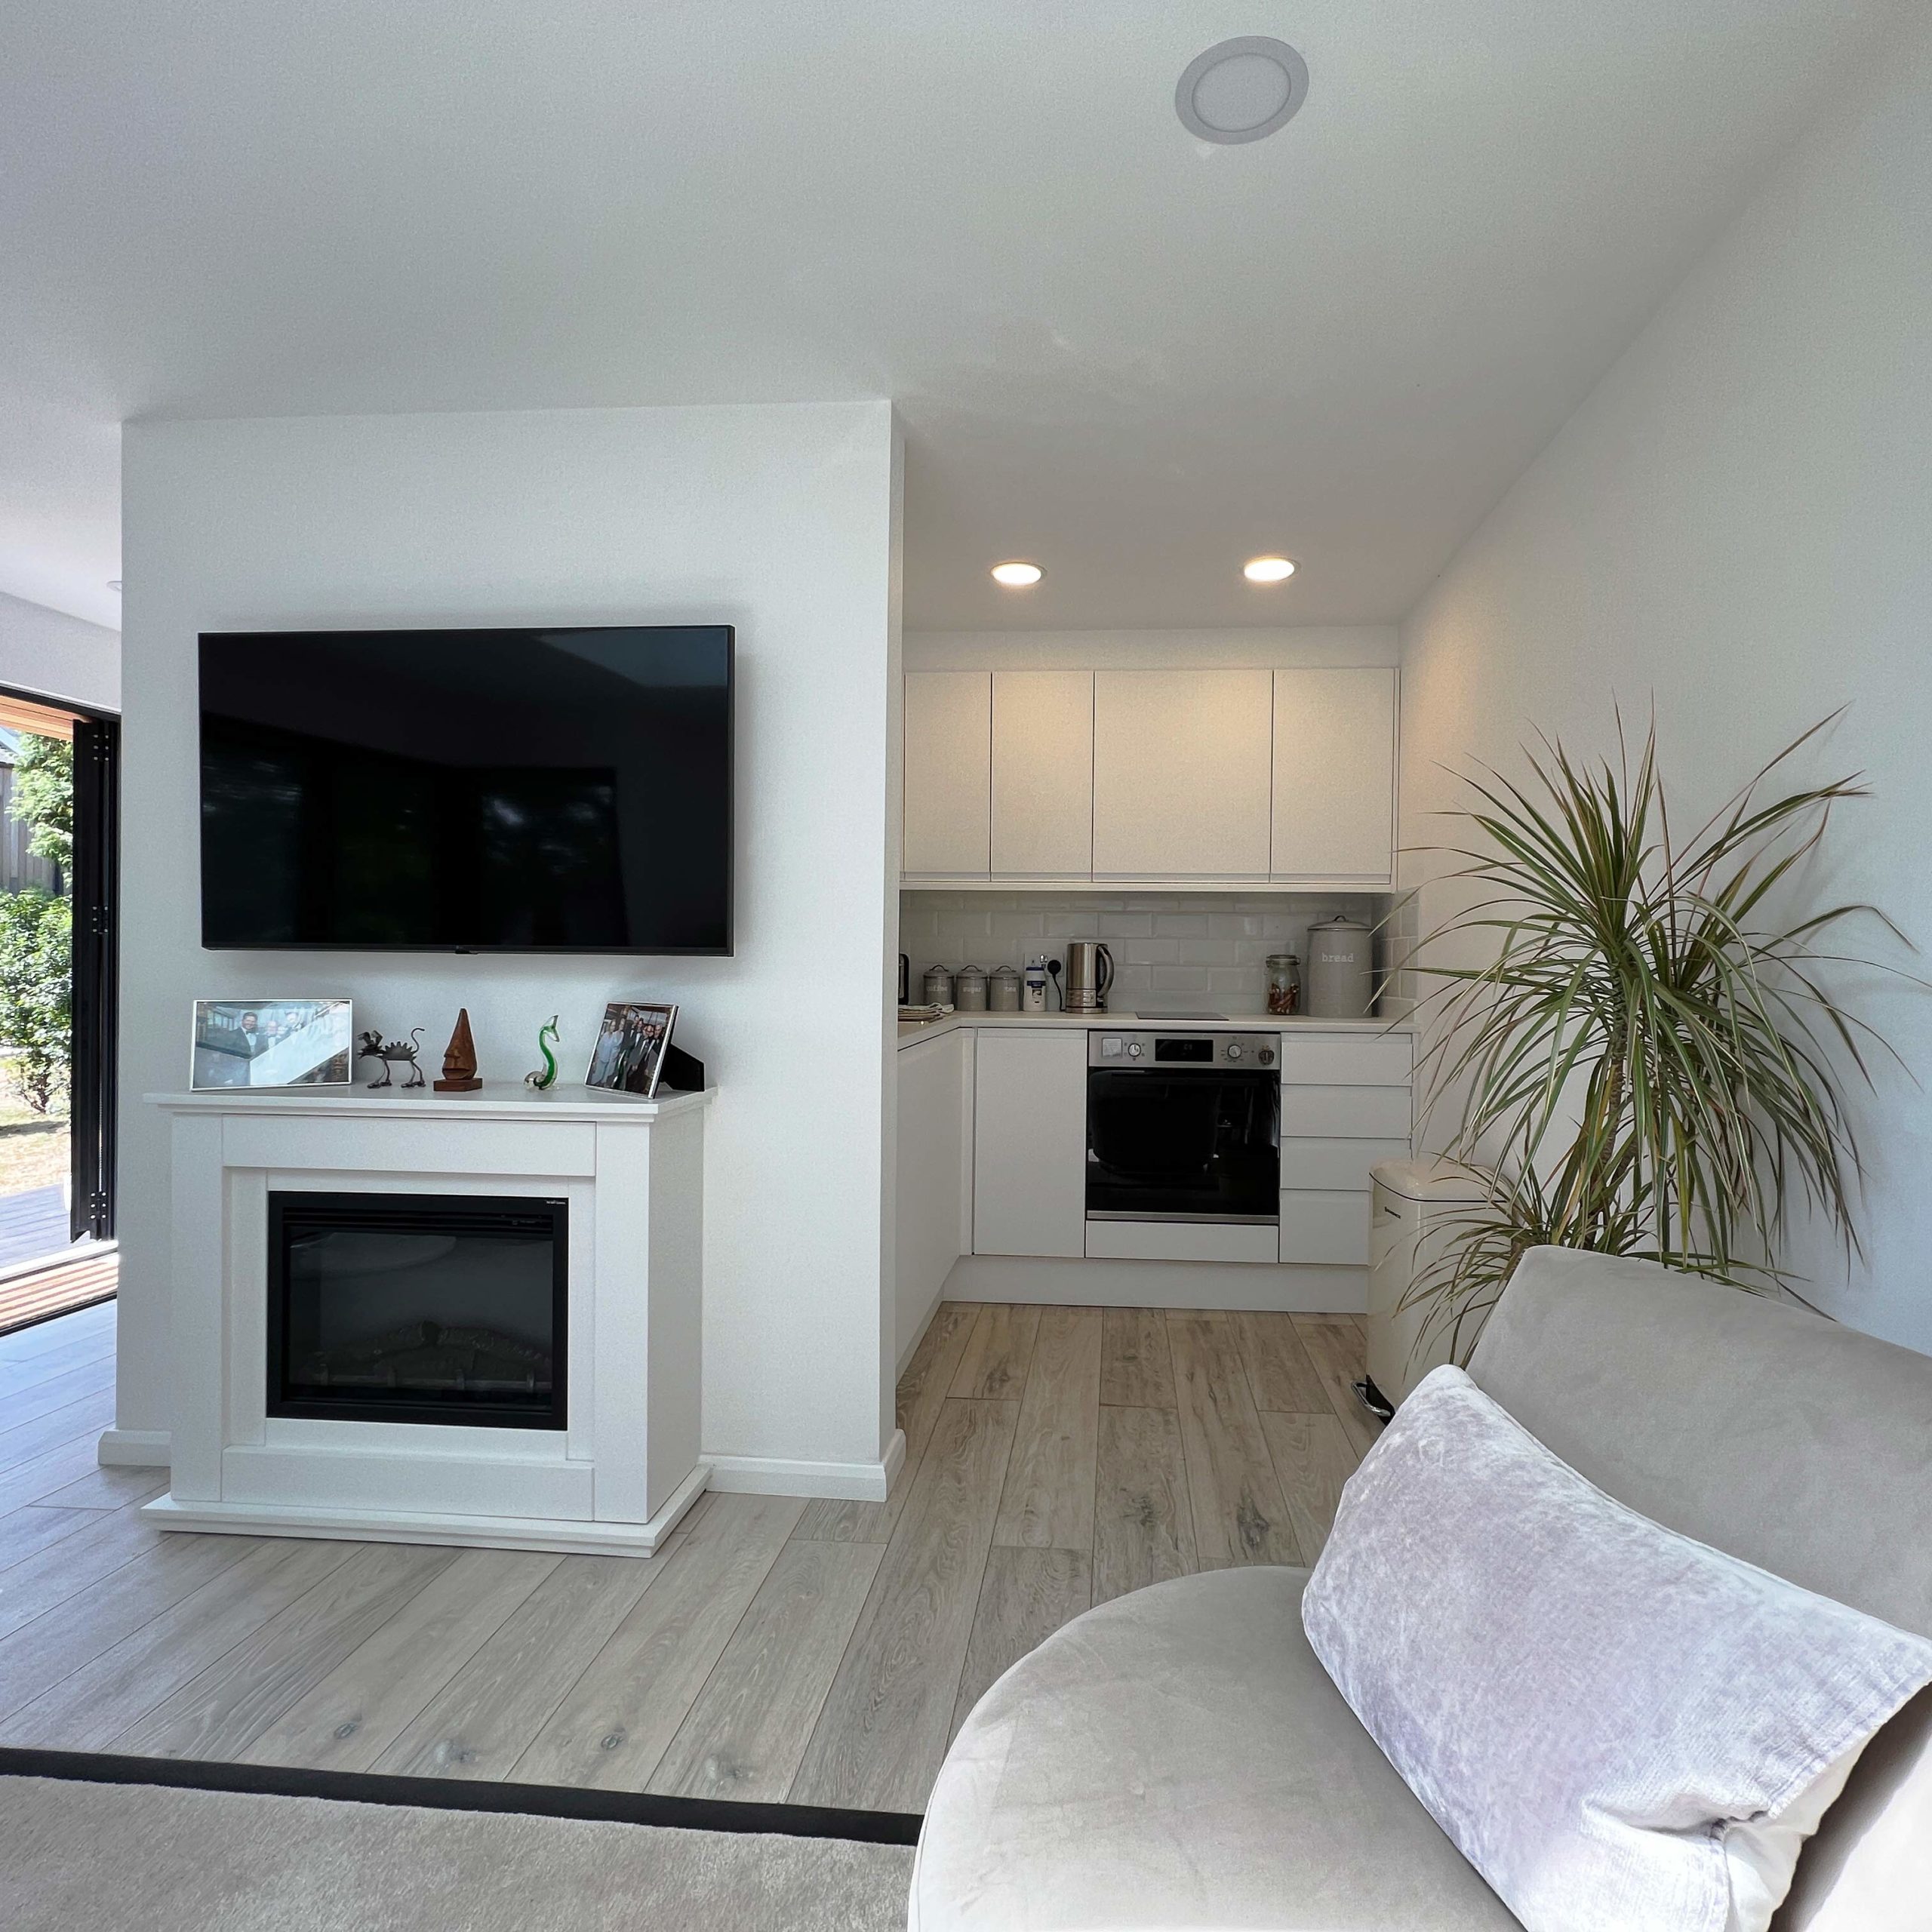 Designer mobile home living room and kitchen area